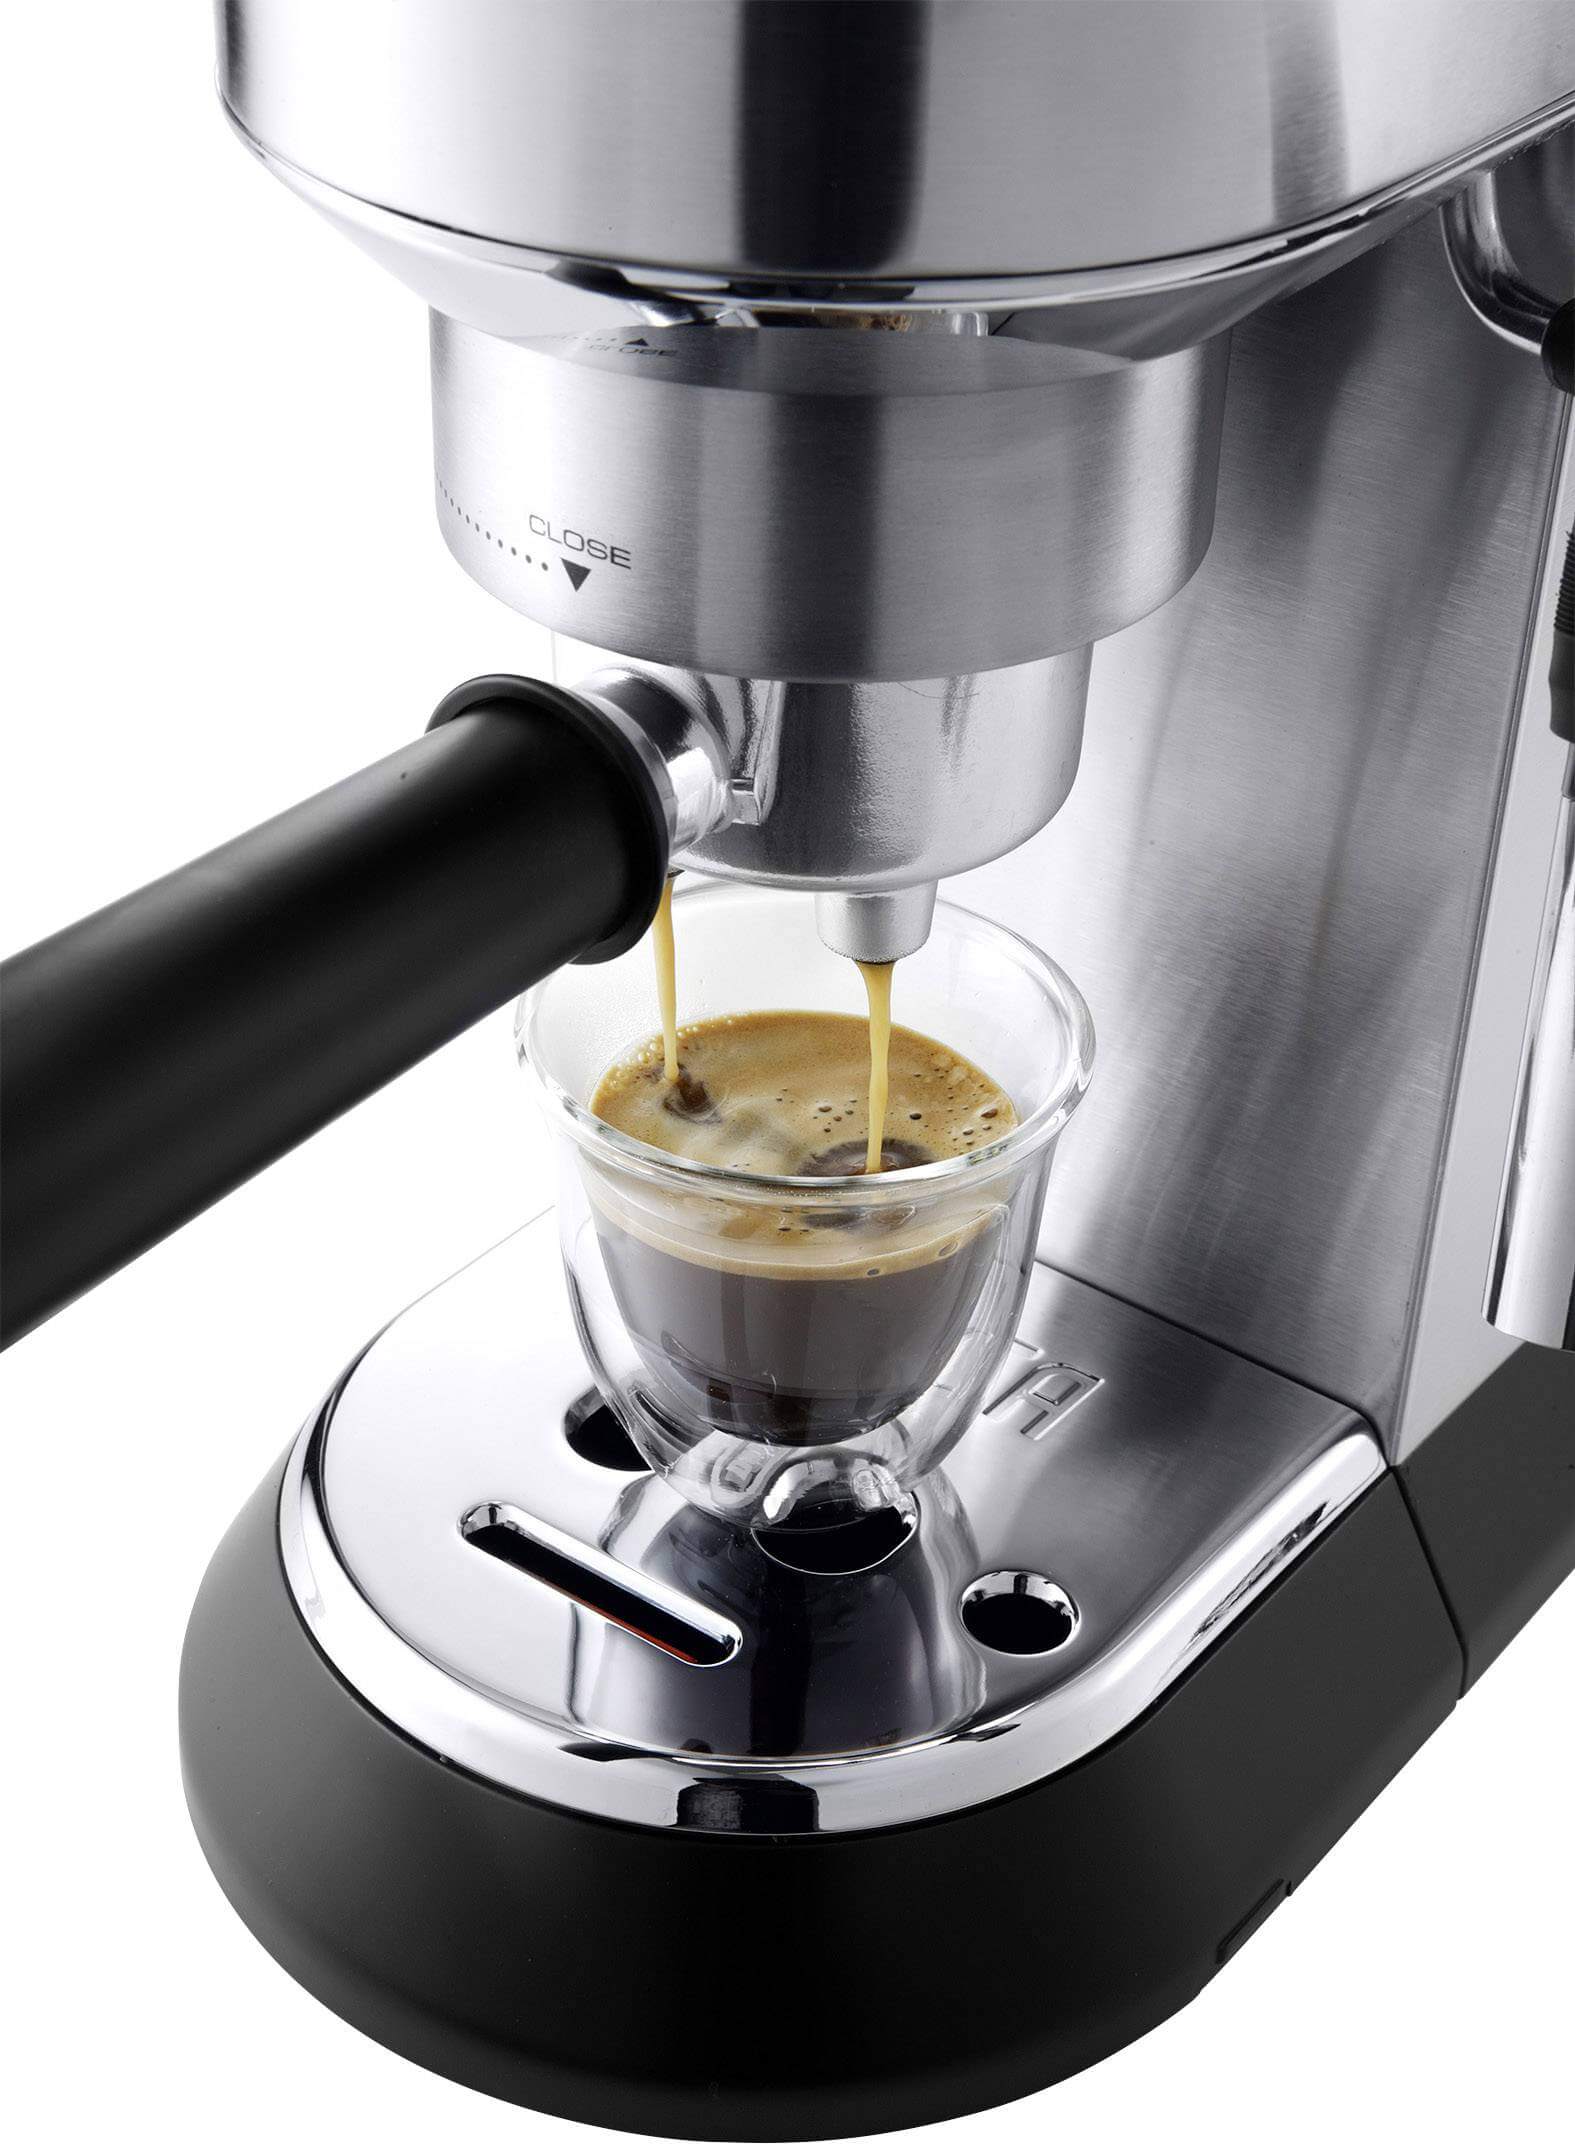 Espresso machine-DeLonghi EC 685.M Espresso Machine